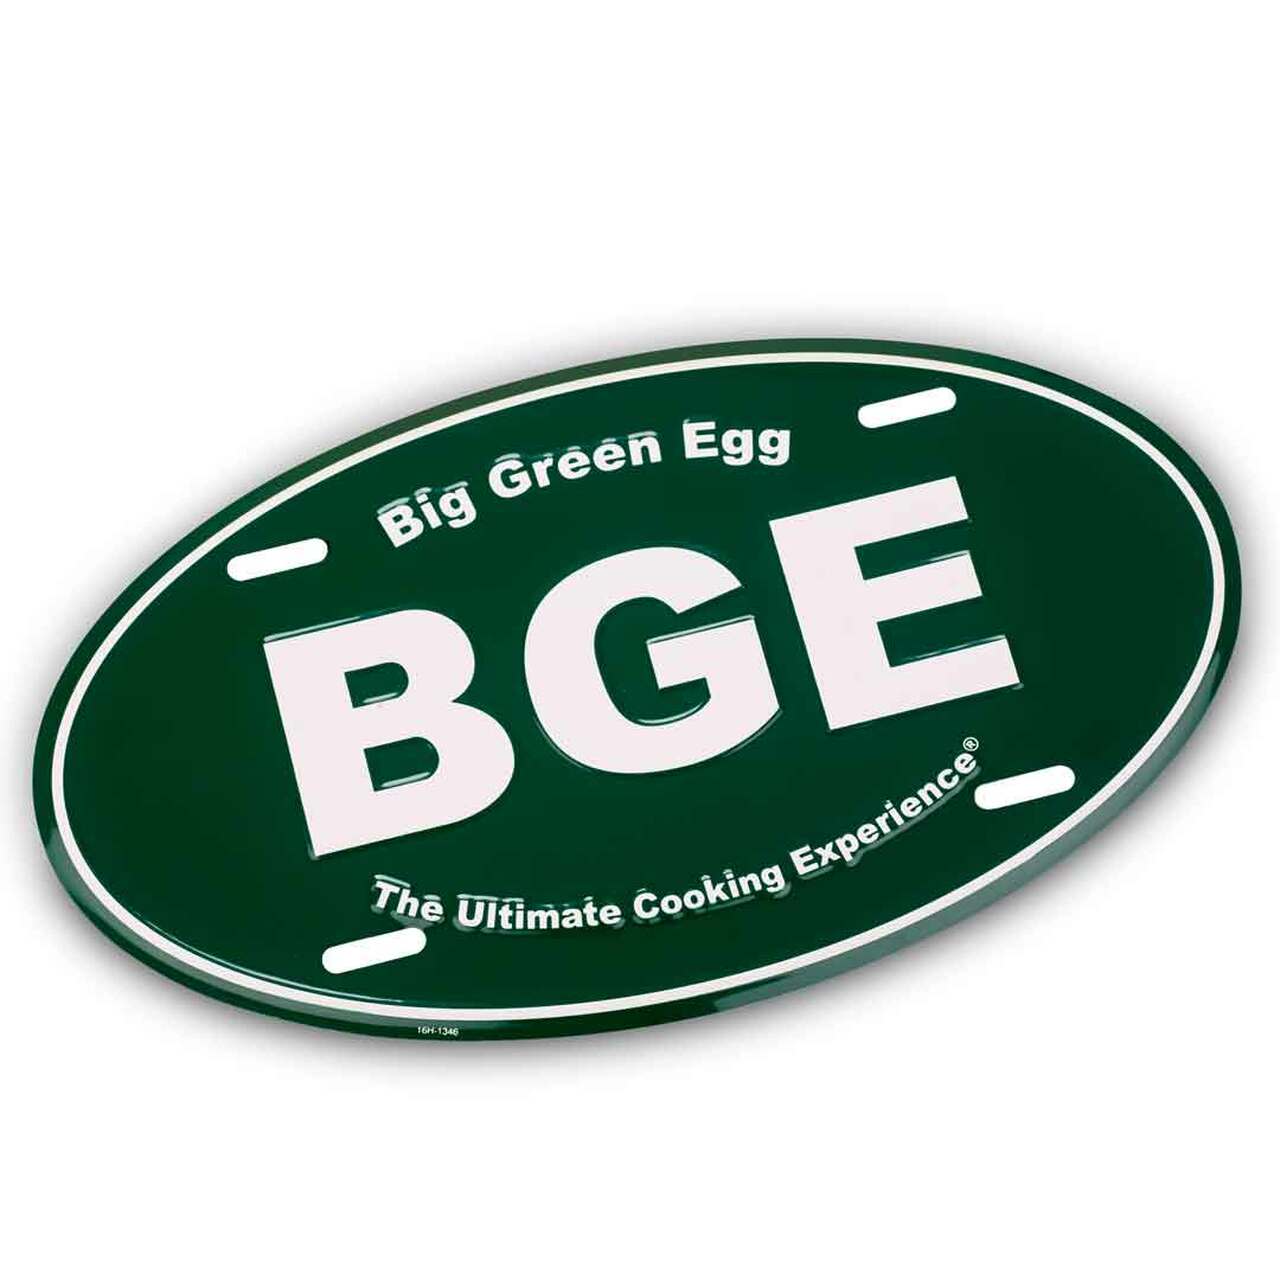 Big Green Egg Oval Sign - Green